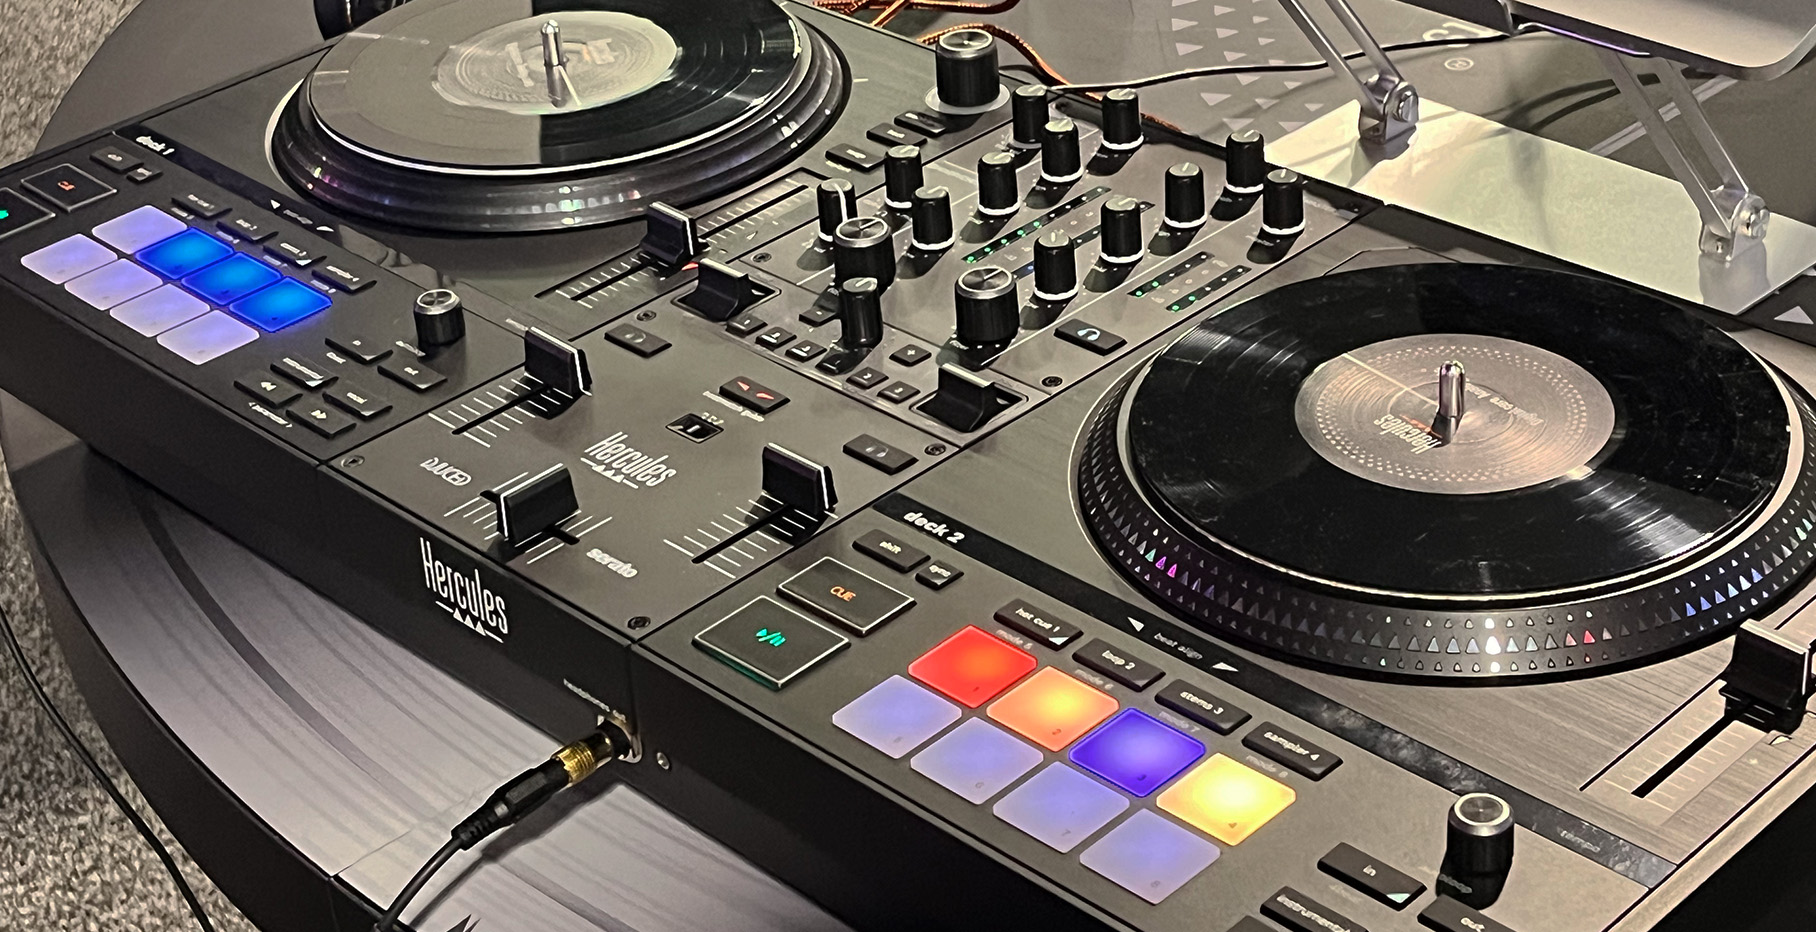 Hercules DJ DJControl Inpulse T7 2-Channel Motorized DJ Controller Black 